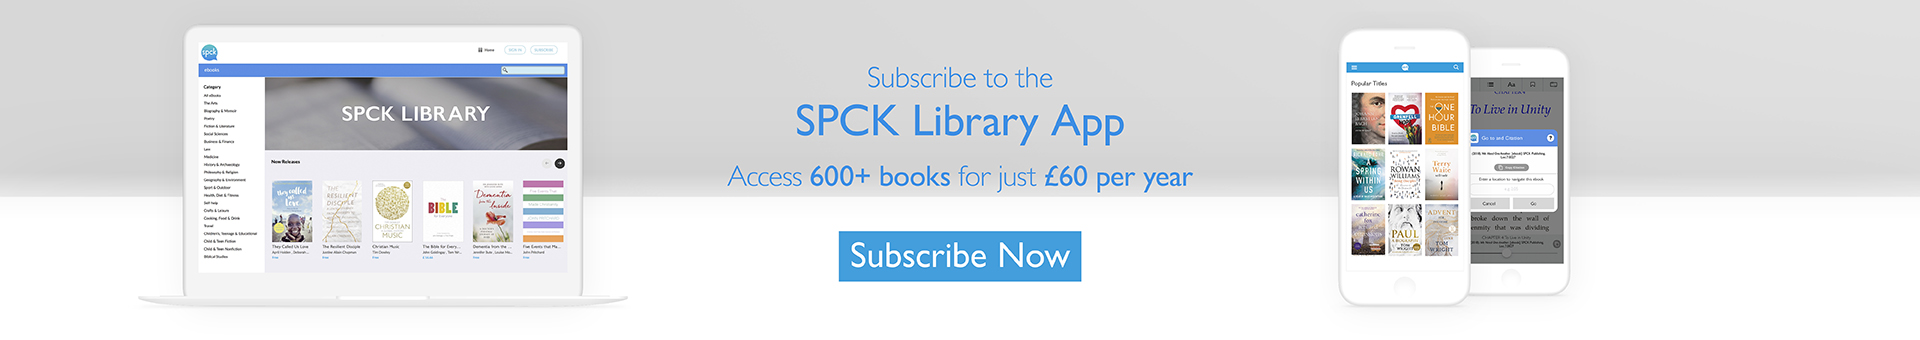 The SPCK Library App